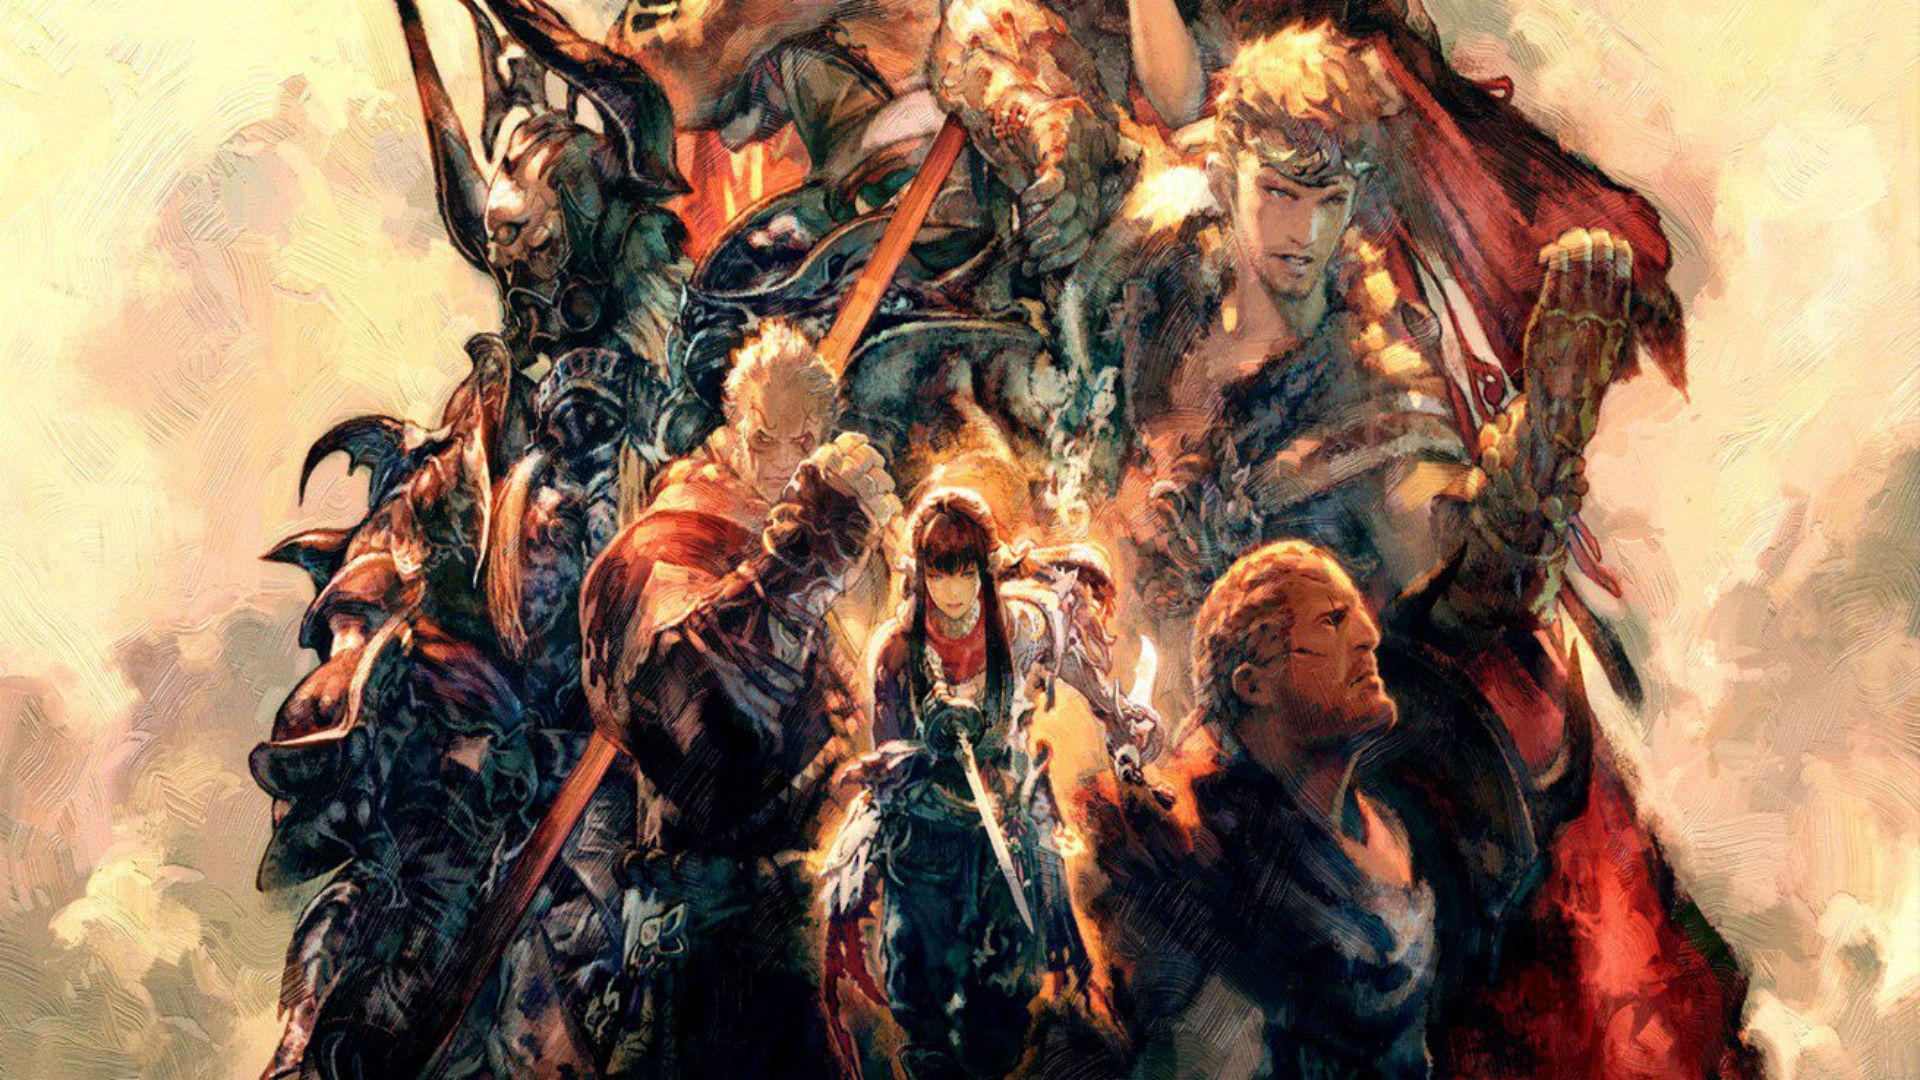 Final Fantasy Xiv Wallpaper, image collections of wallpaper